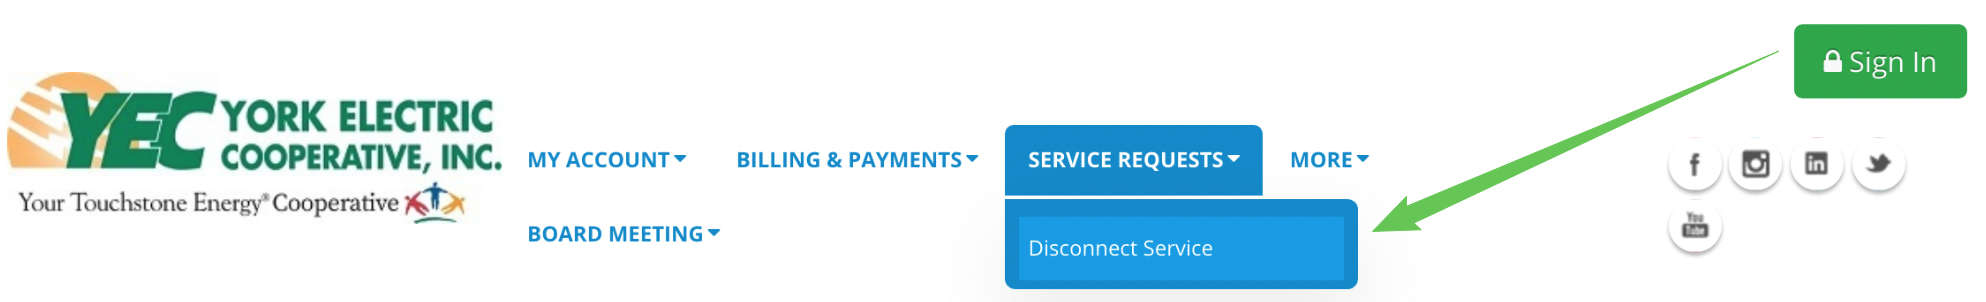 Member Portal Disconnect Service menu screenshot.